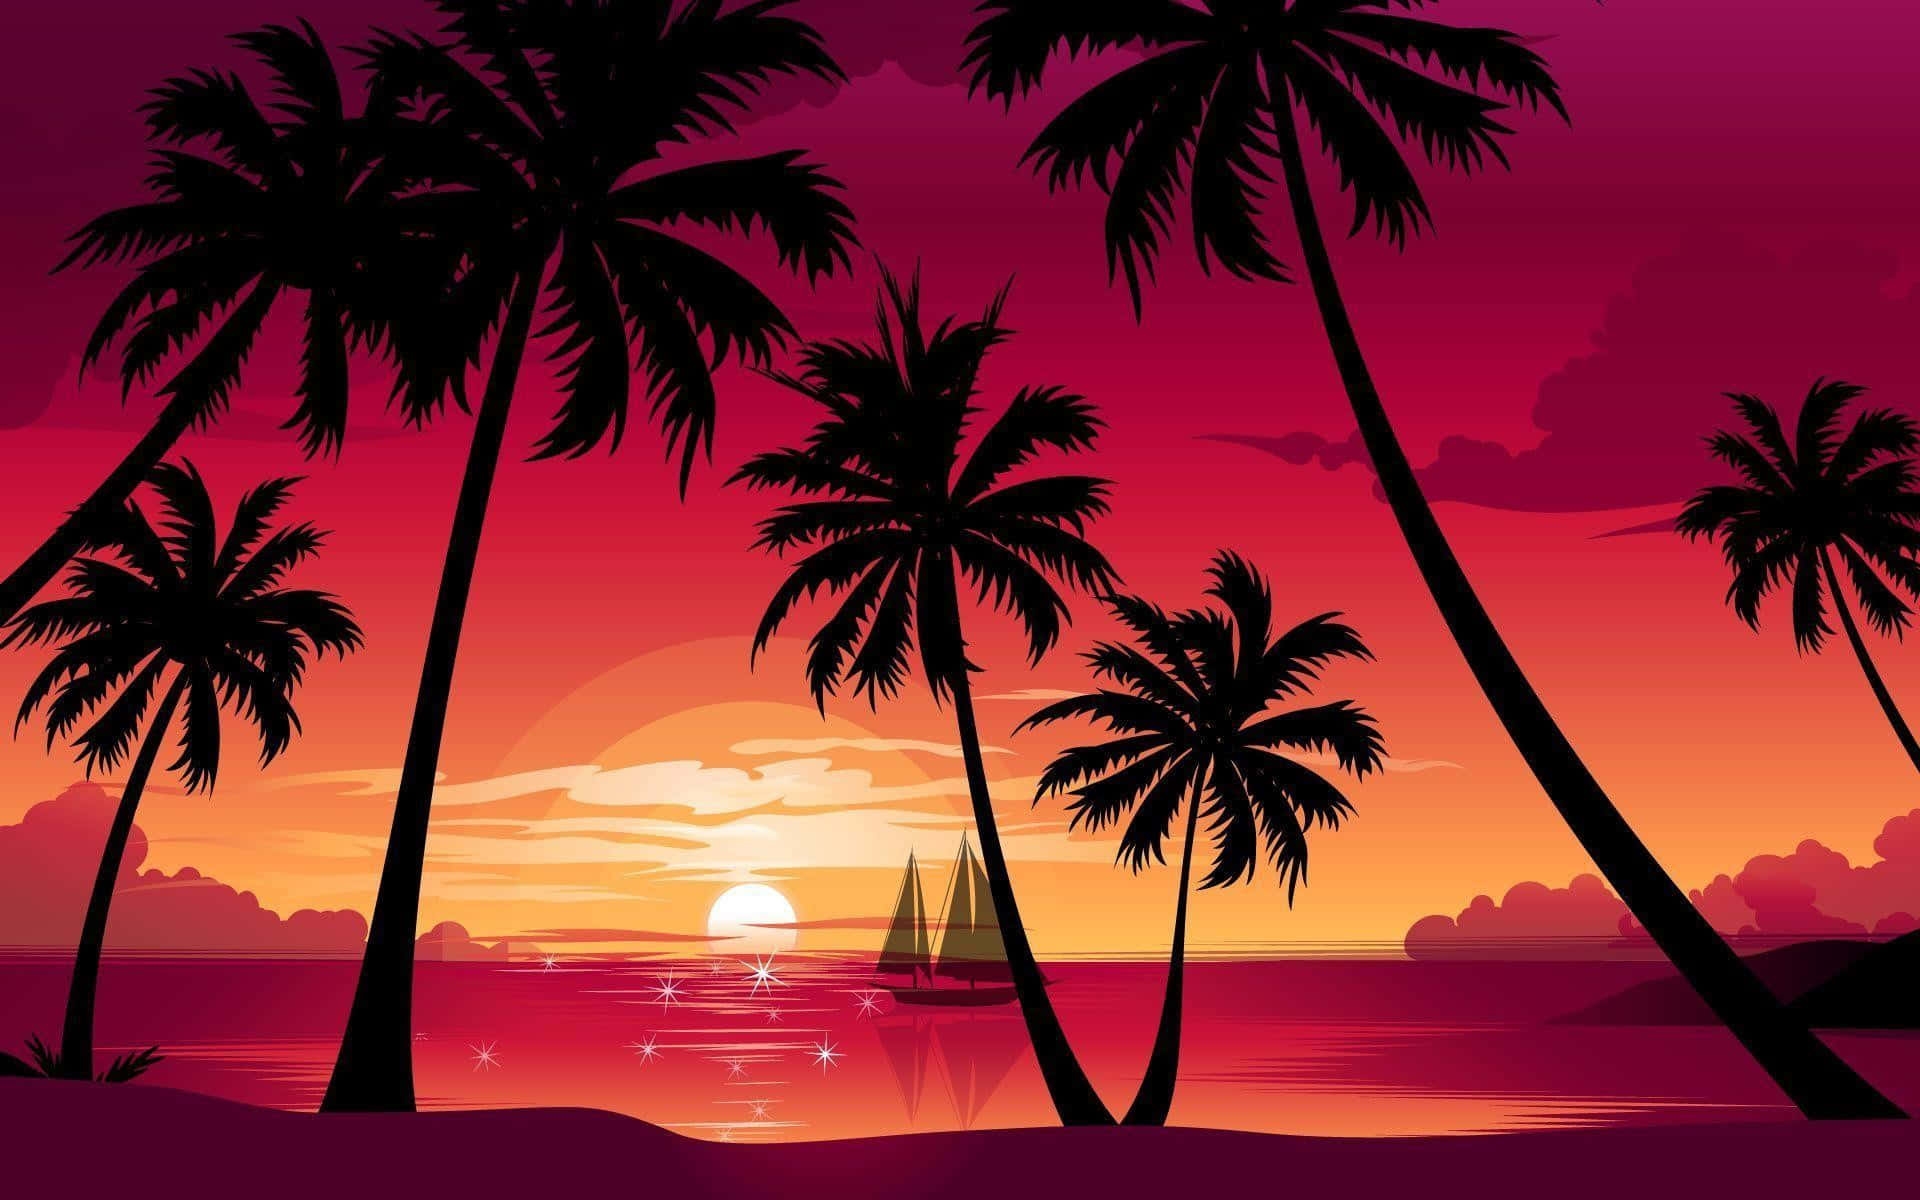 Tag på ferie til paradis - Pink Beach Sunset Wallpaper